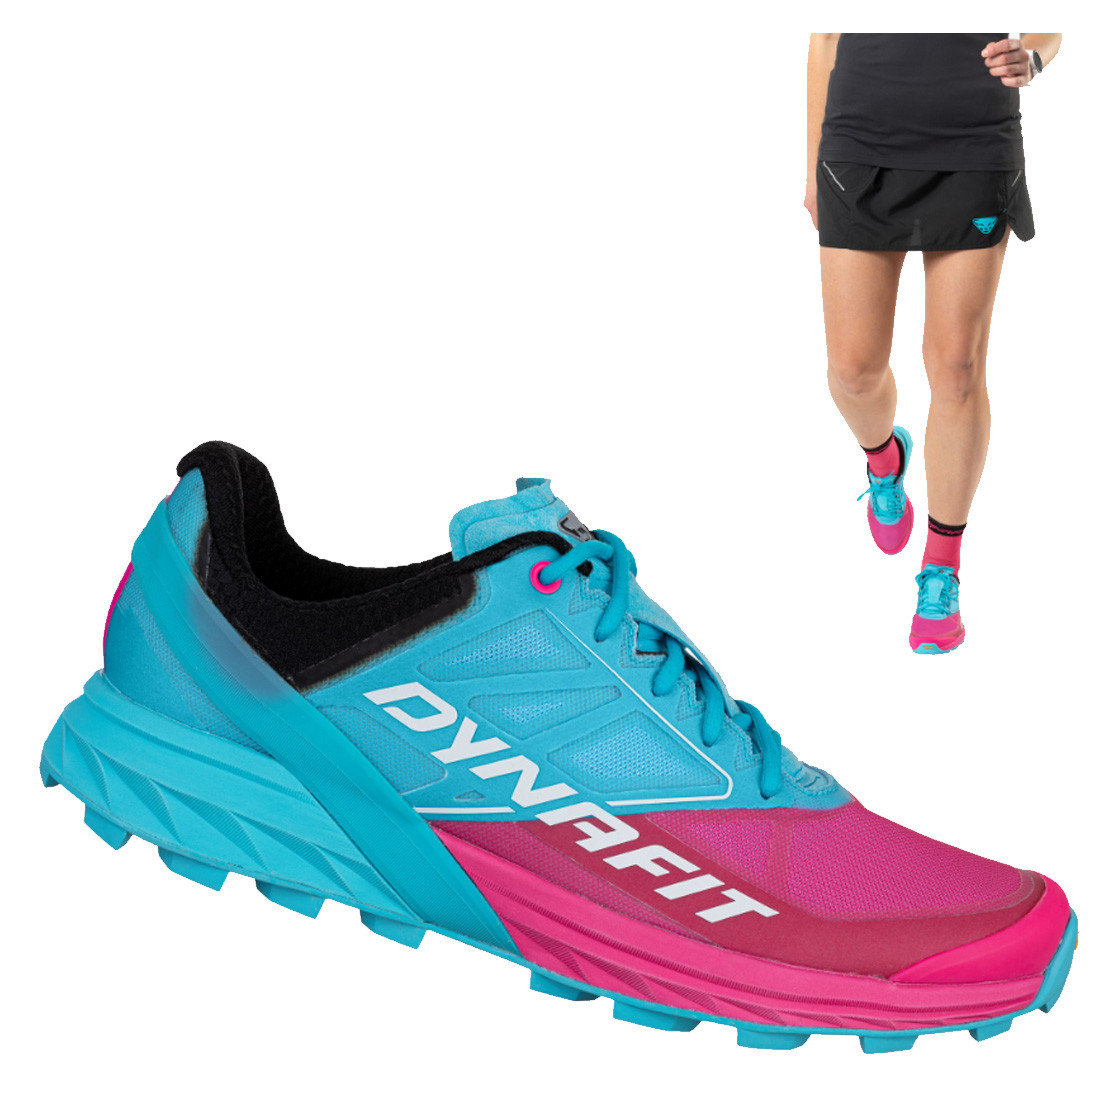 DYNAFIT - Ultra 50 Laufschuh Damen Trailrunning Vibram, pink türkis von Burton, Gonso, Völkl, ...